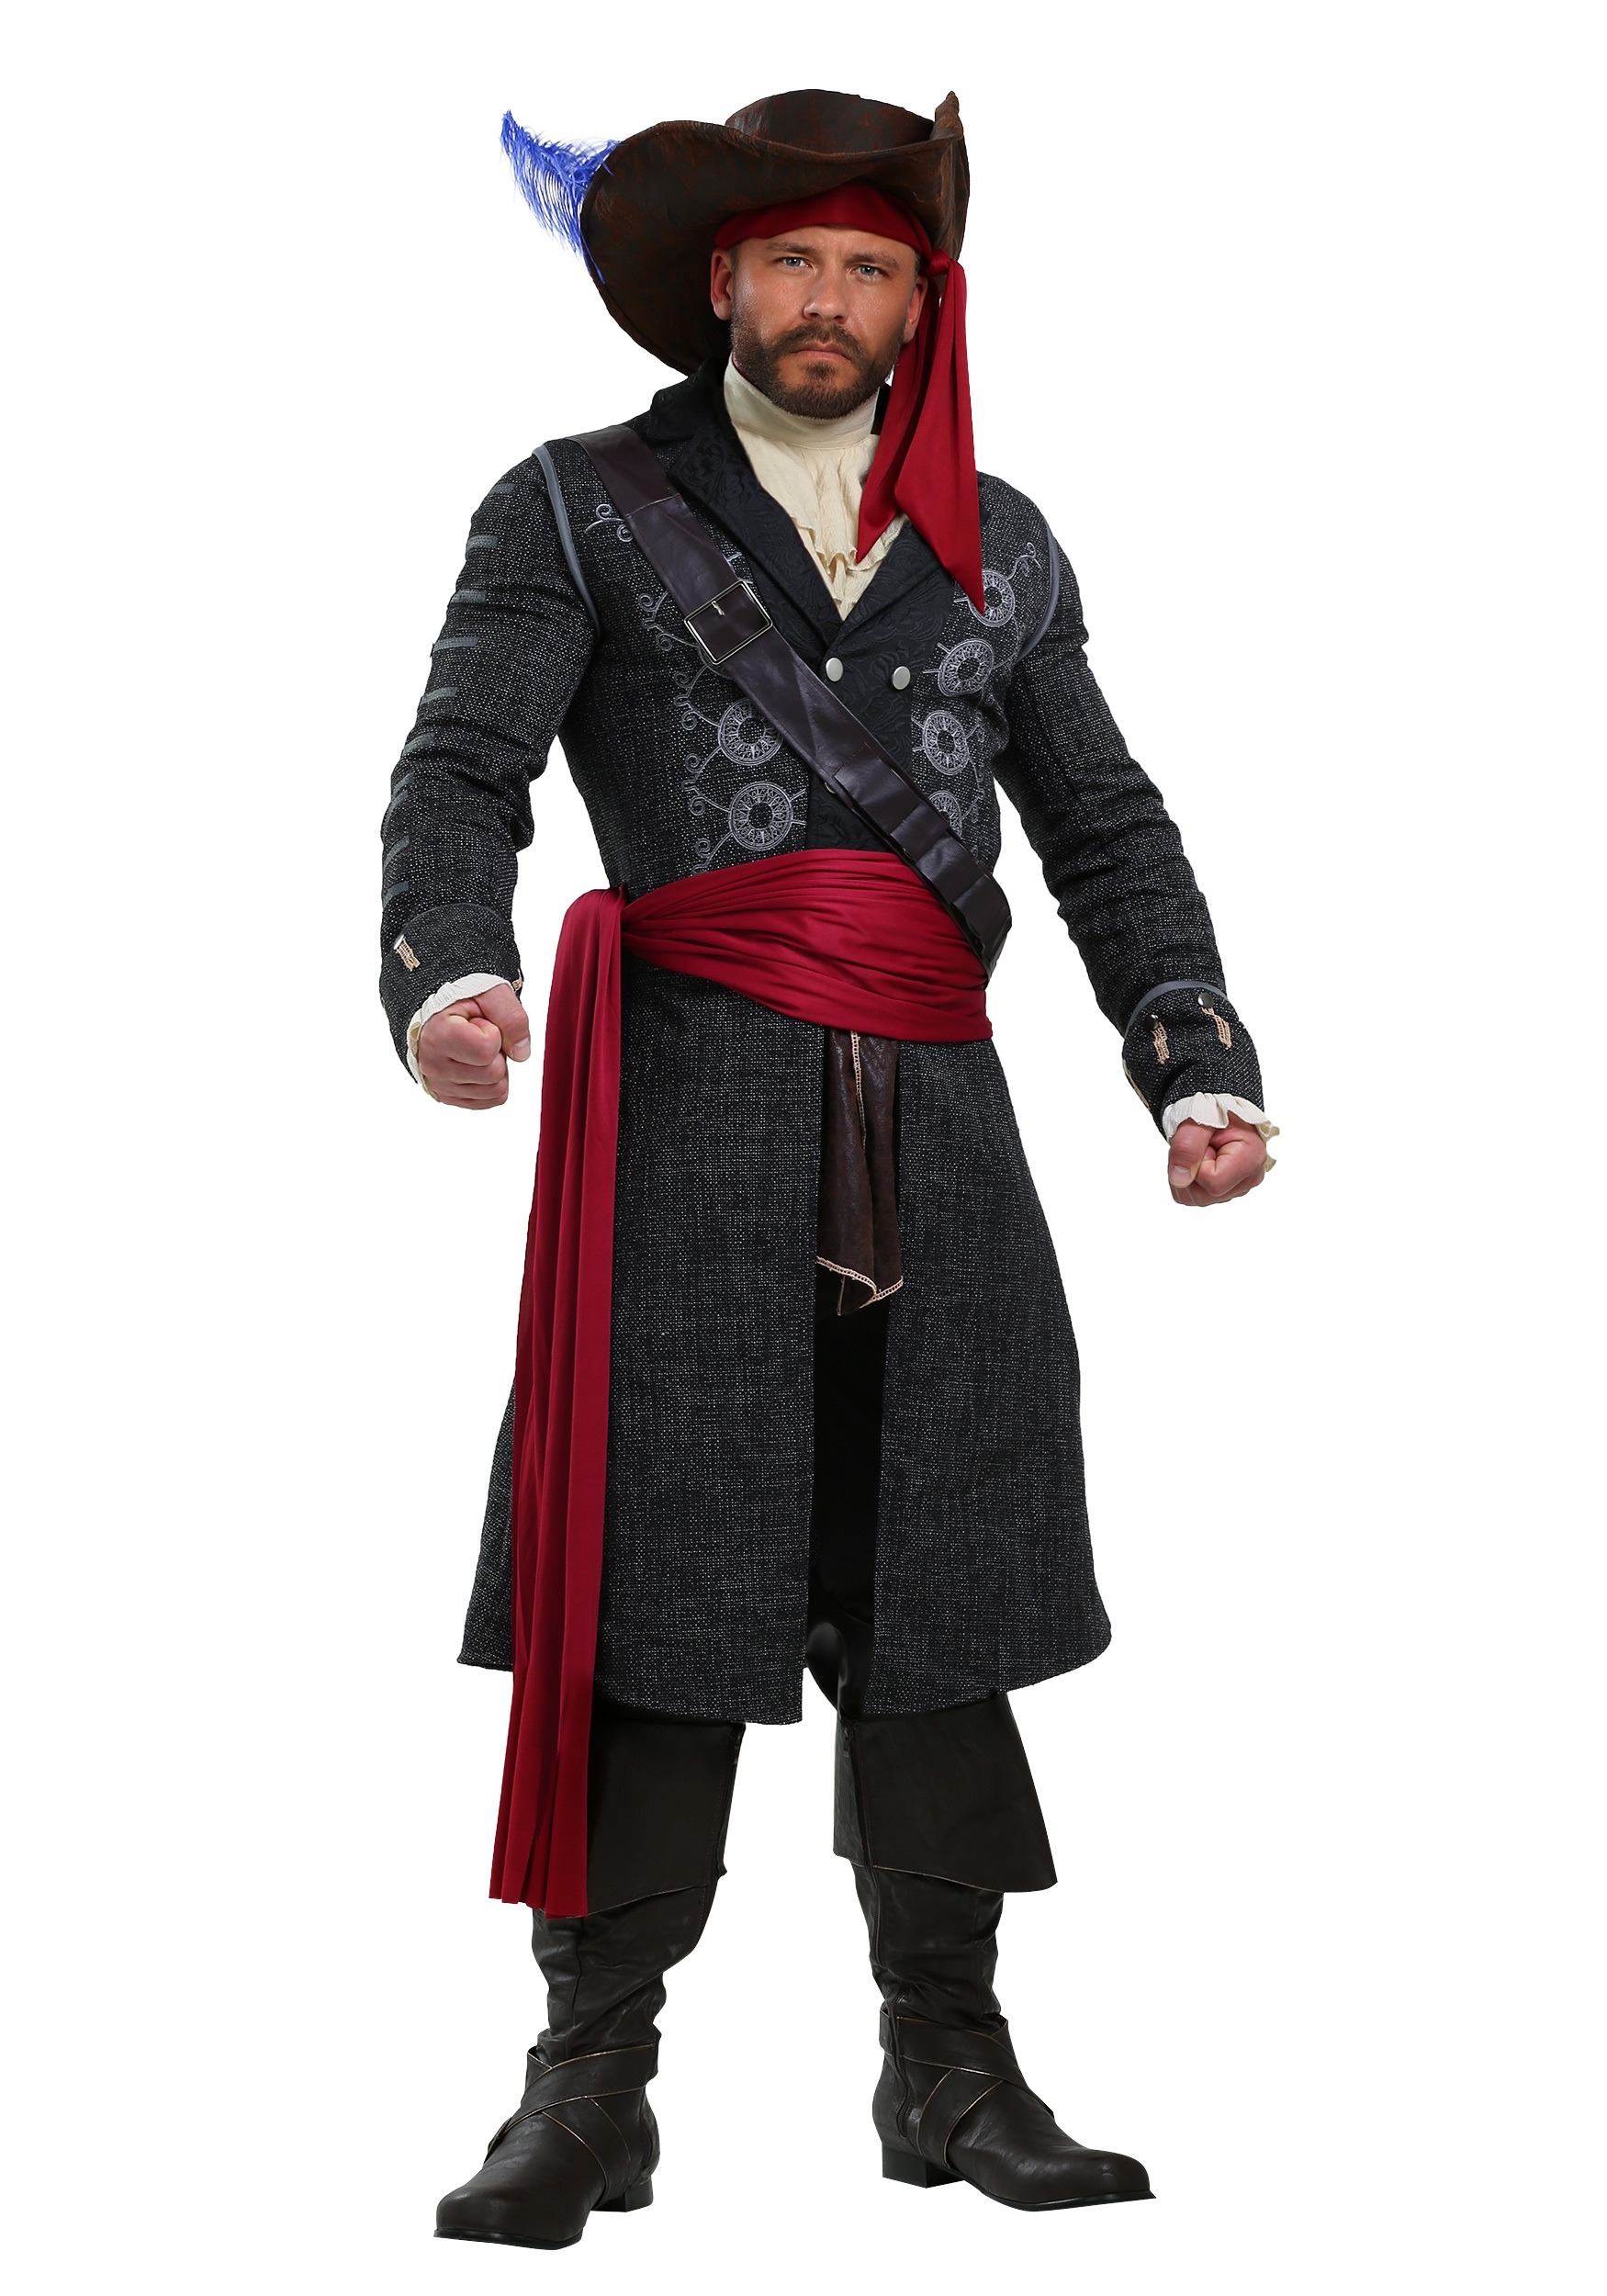 Photos - Fancy Dress FUN Costumes Blackbeard Plus Size Costume for Men | Men's Pirate Costume B